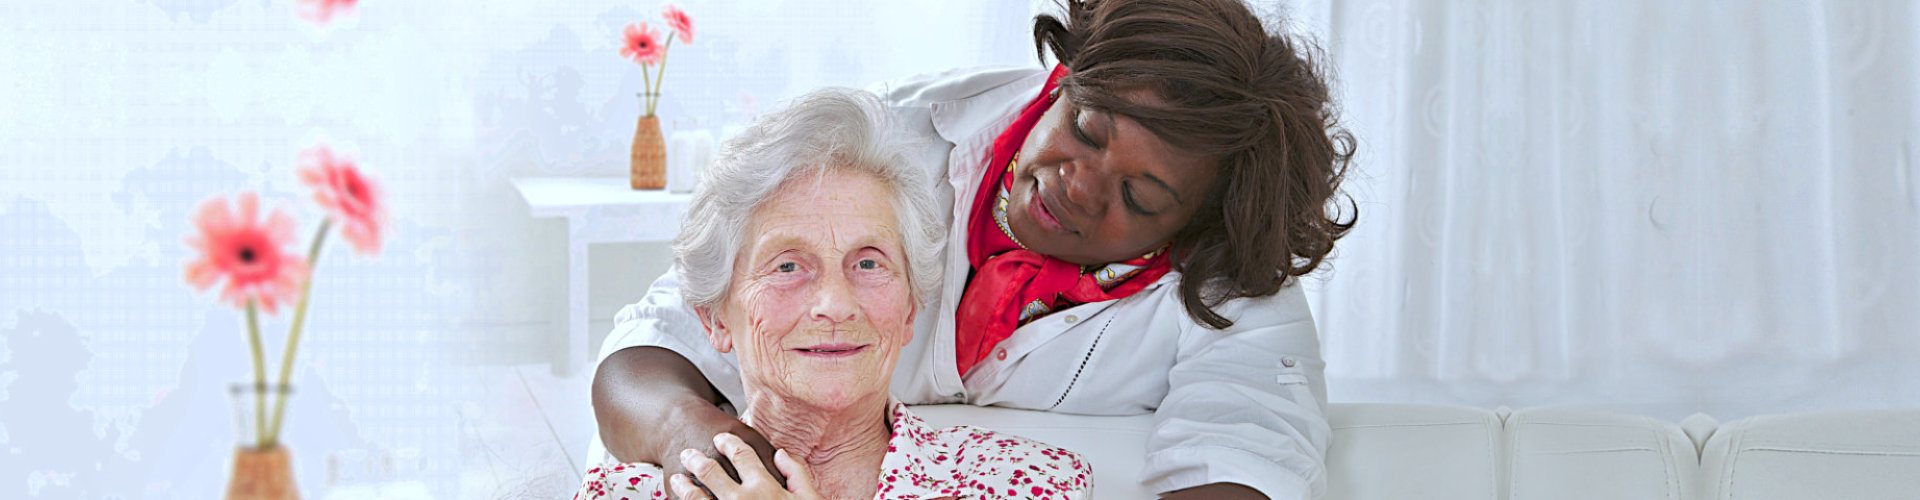 caregiver hugs senior woman smiling